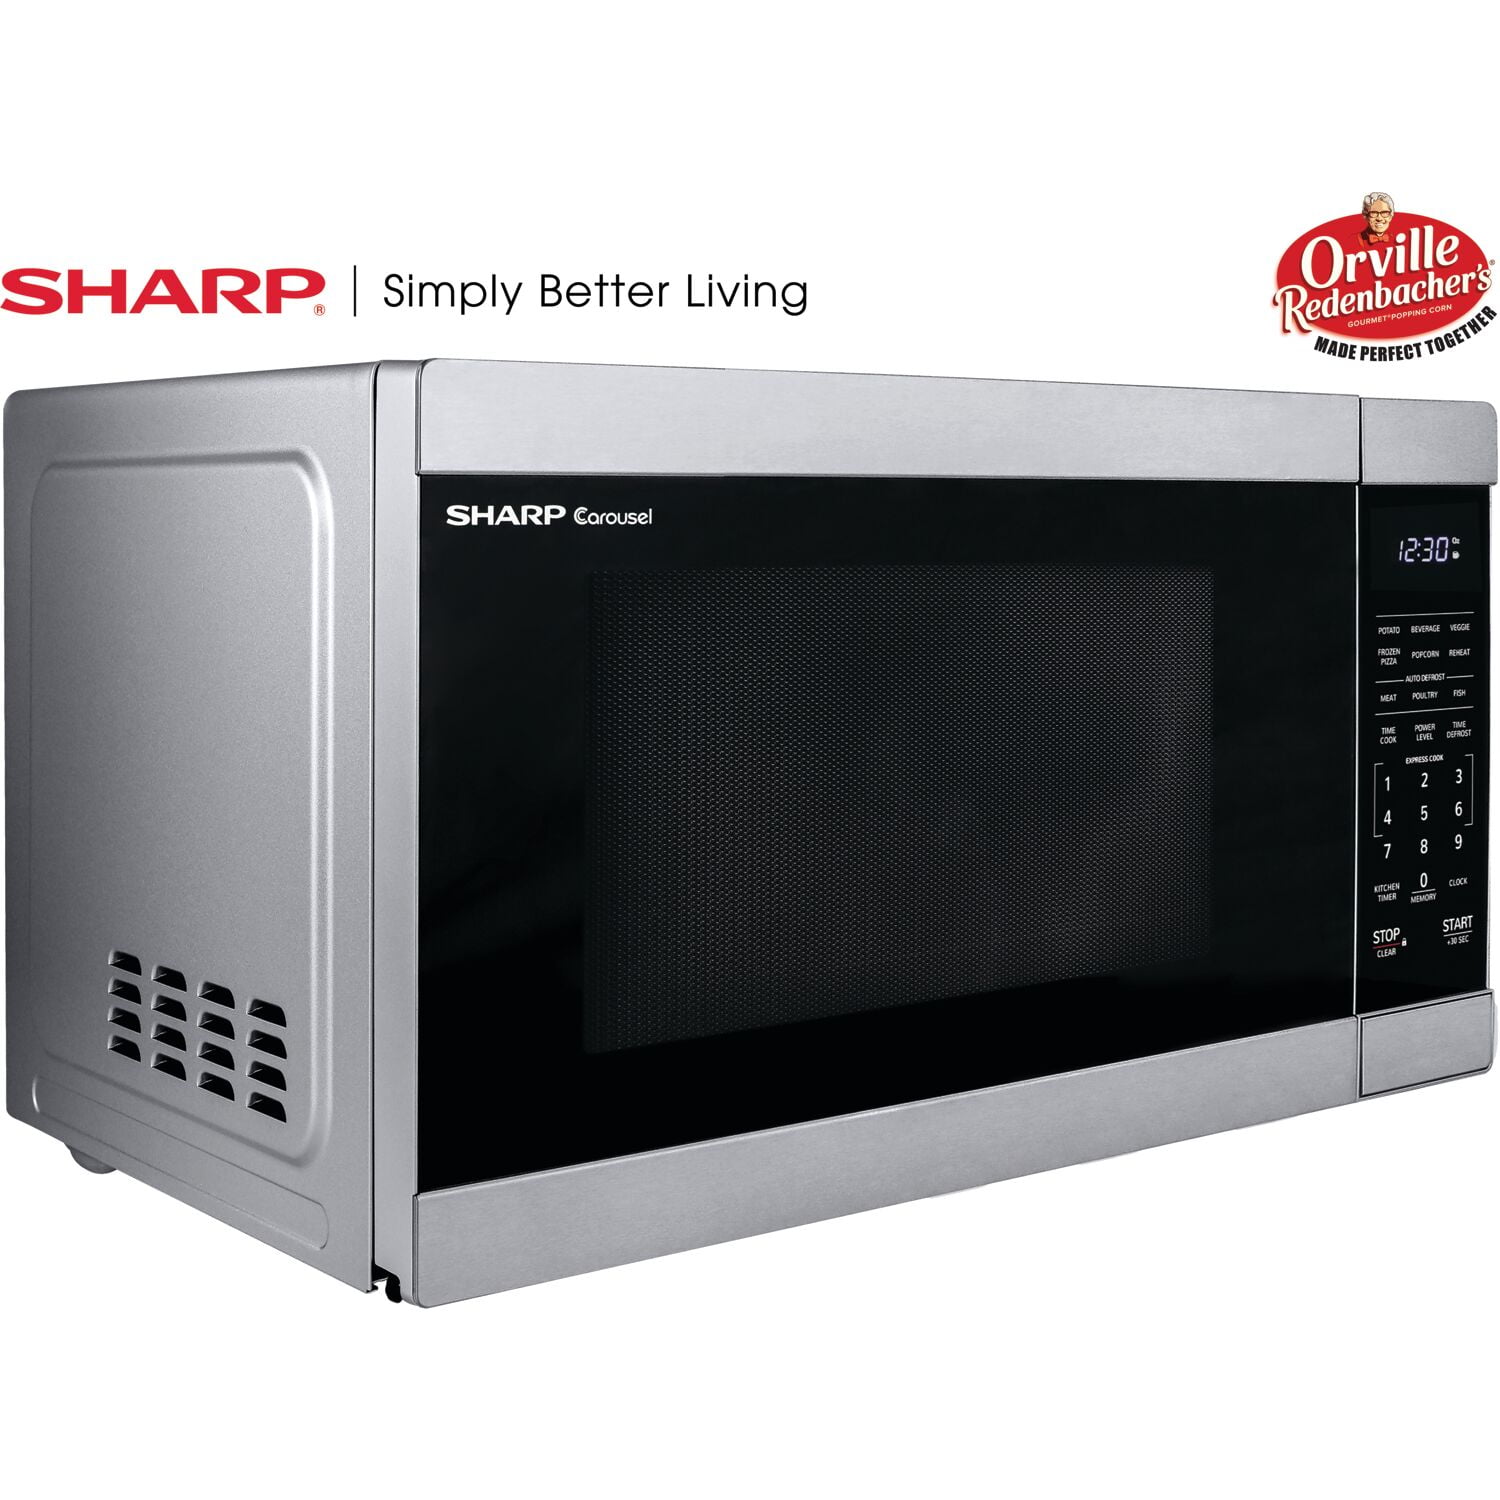 ALT ITEM: 31460  1000W Microwave Oven, Model P100N30ALS3B